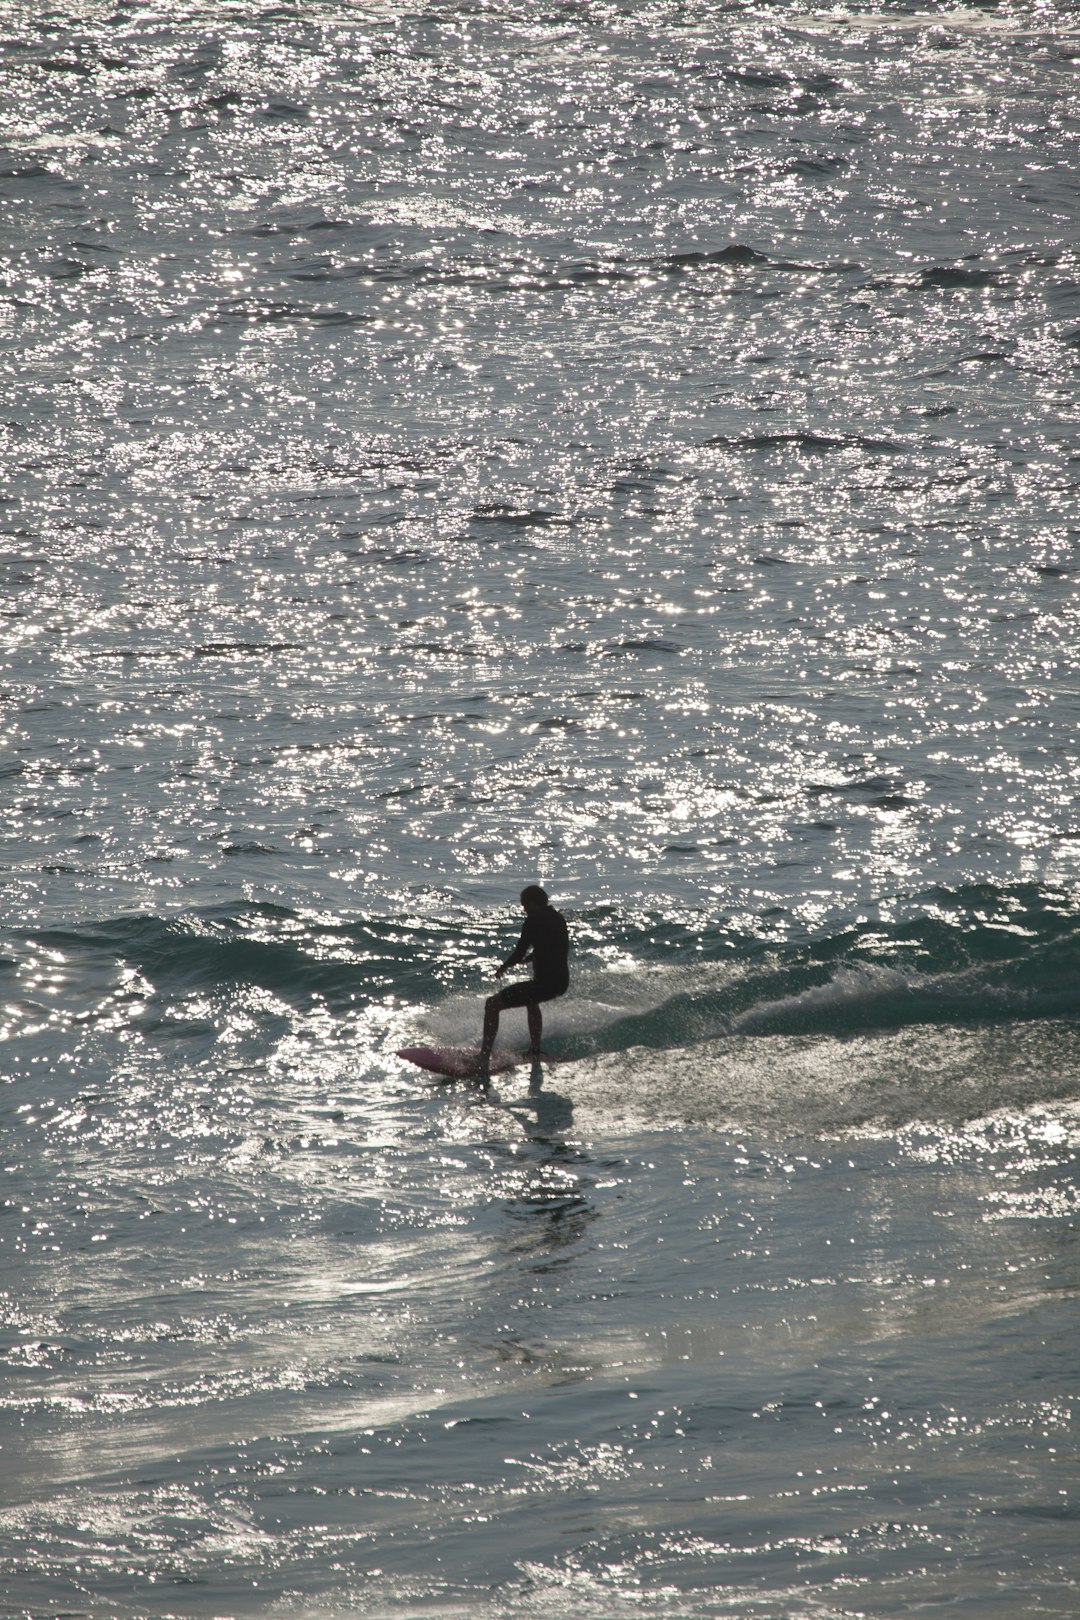 Surfing photo spot Tamarama Beach Kurnell